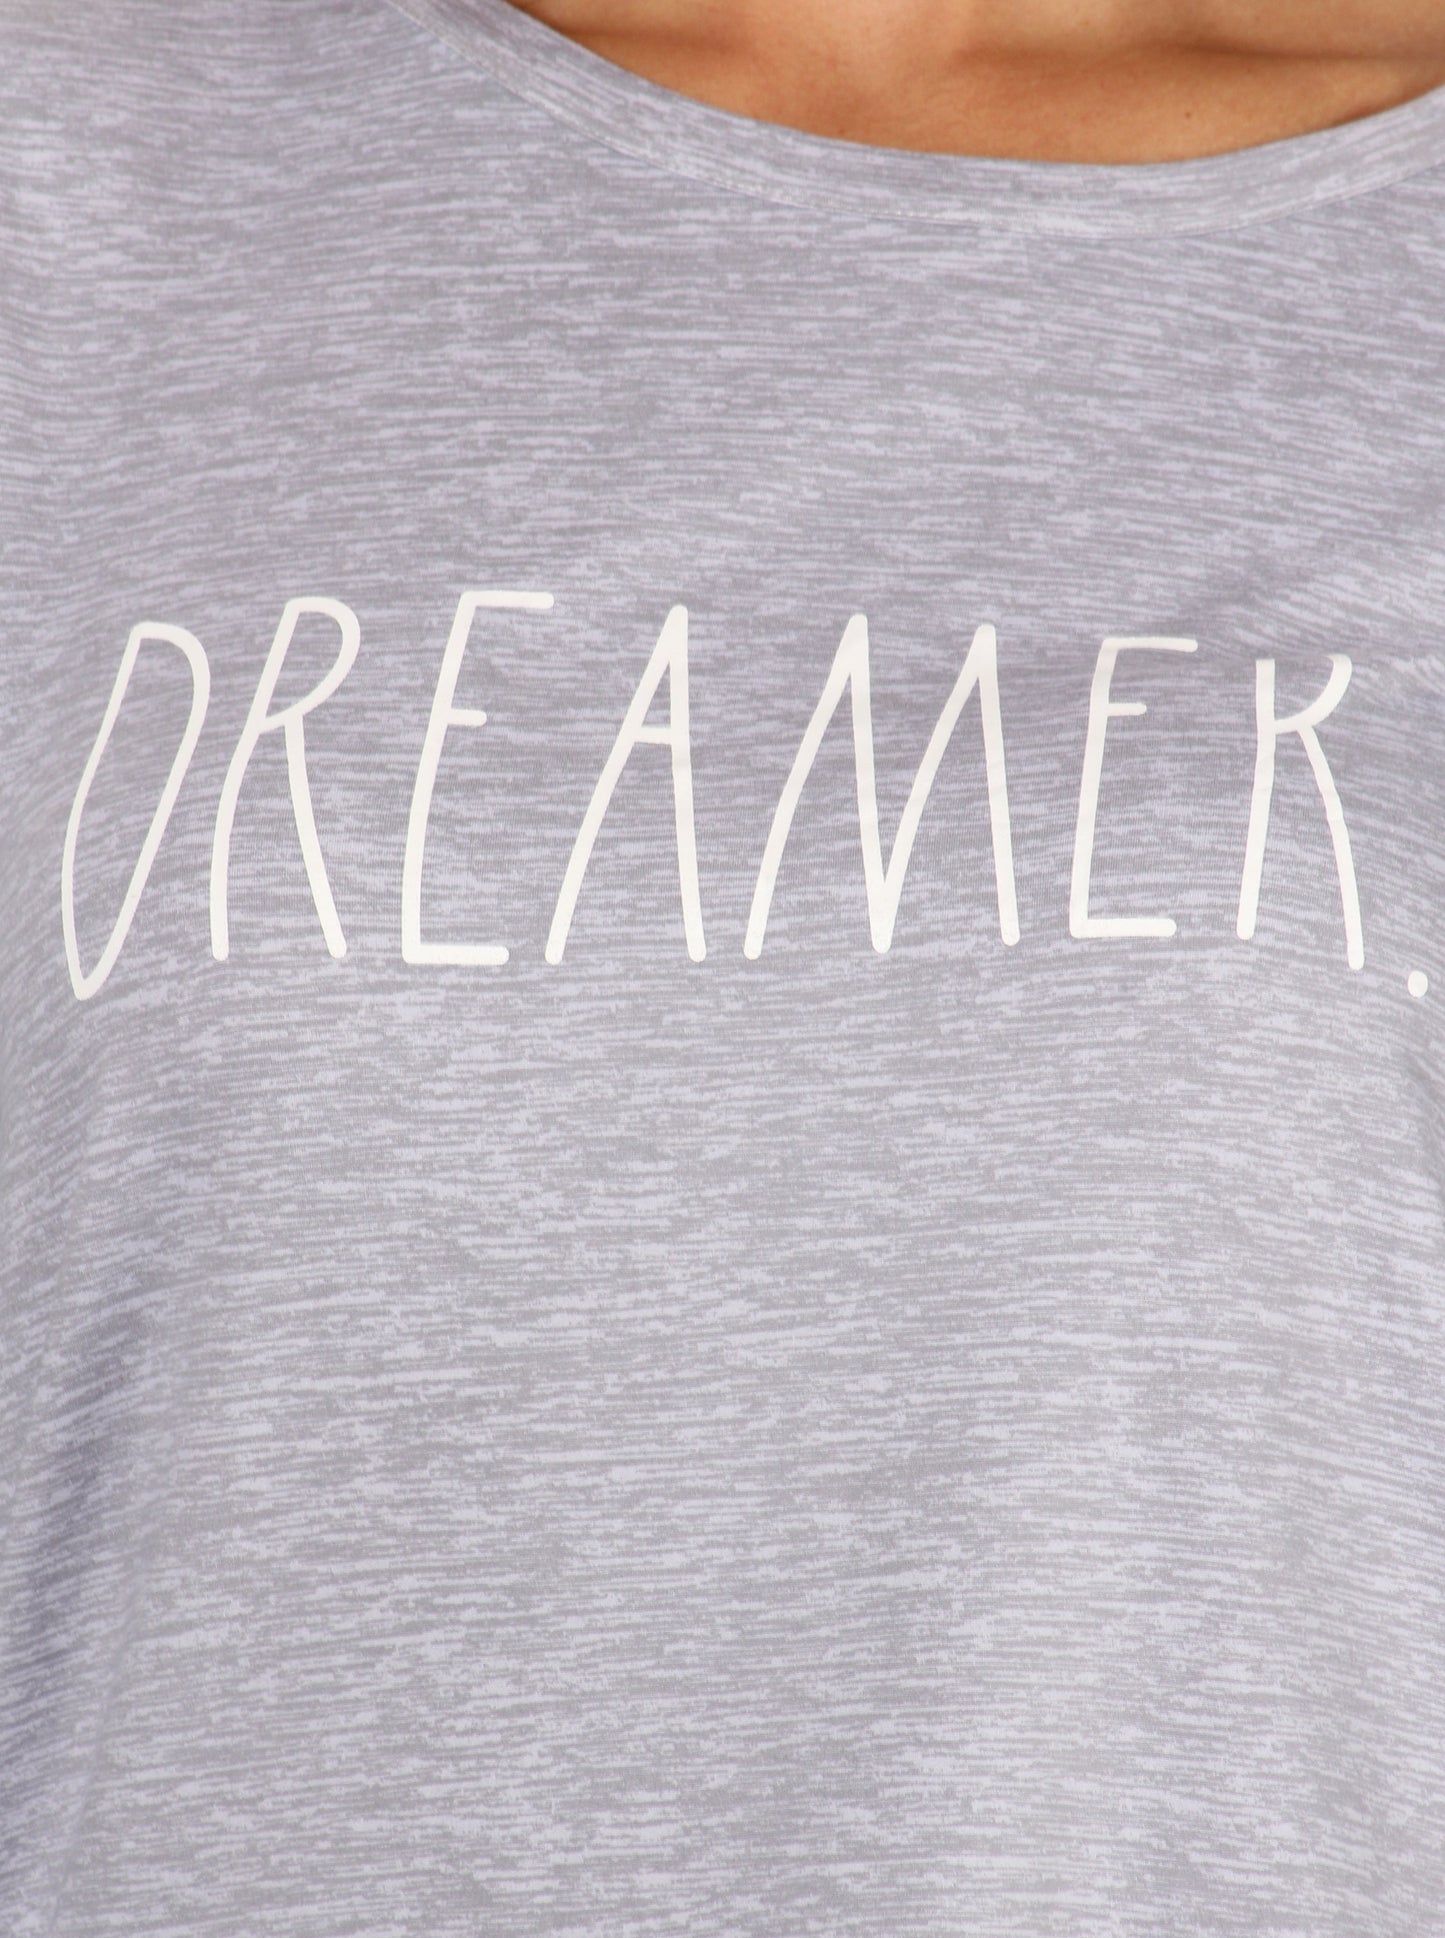 Women's "DREAMER" Long Sleeve Top and Jogger Pajama Set - Rae Dunn Wear